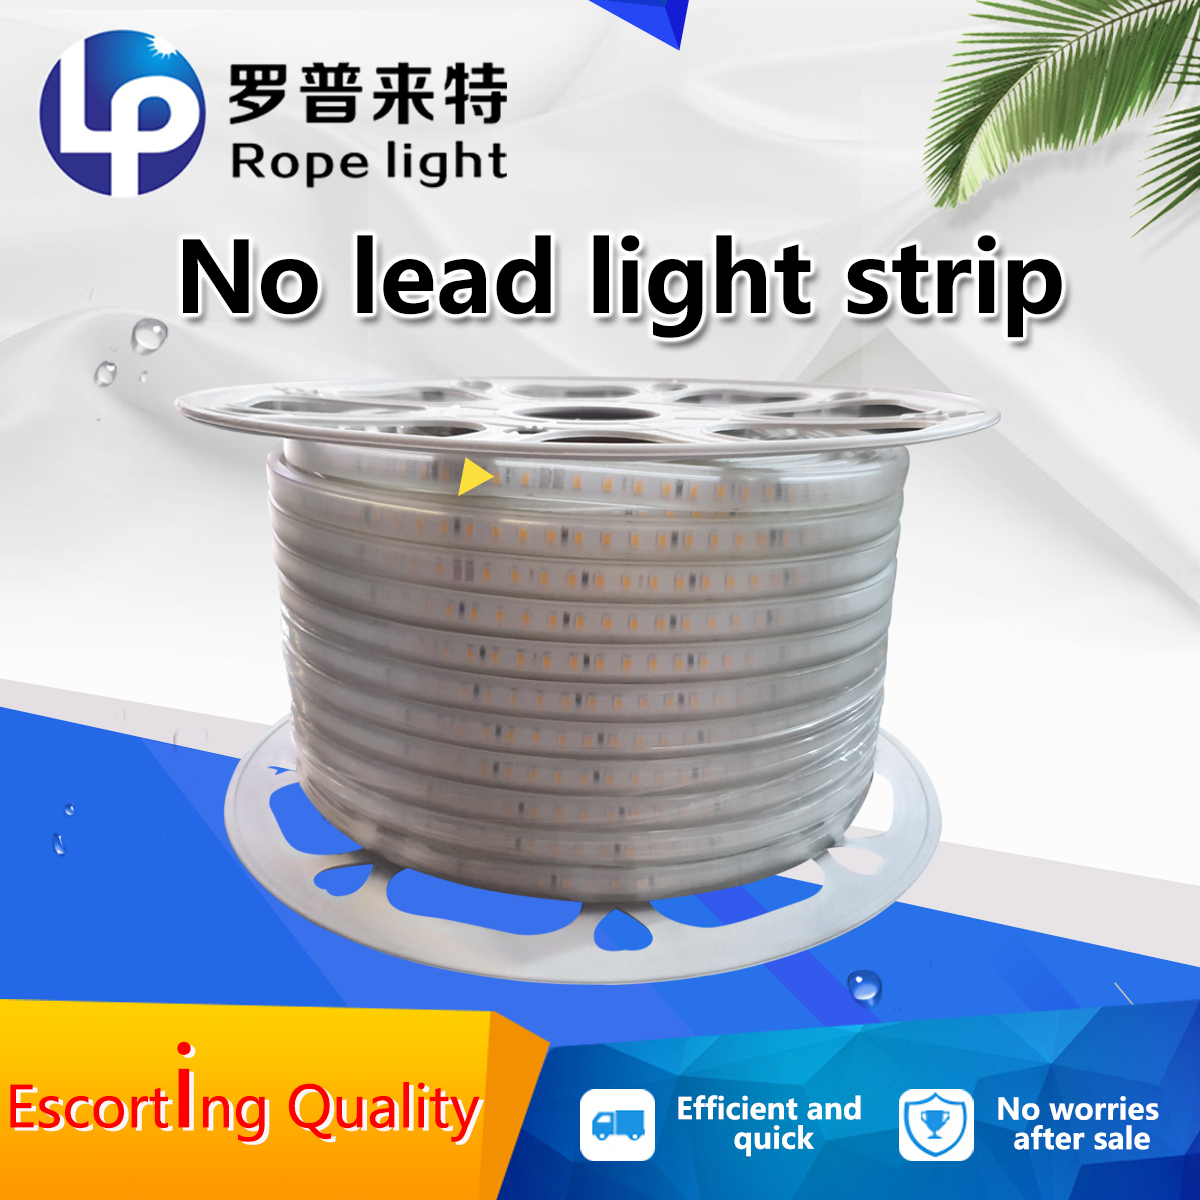 No lead light strip